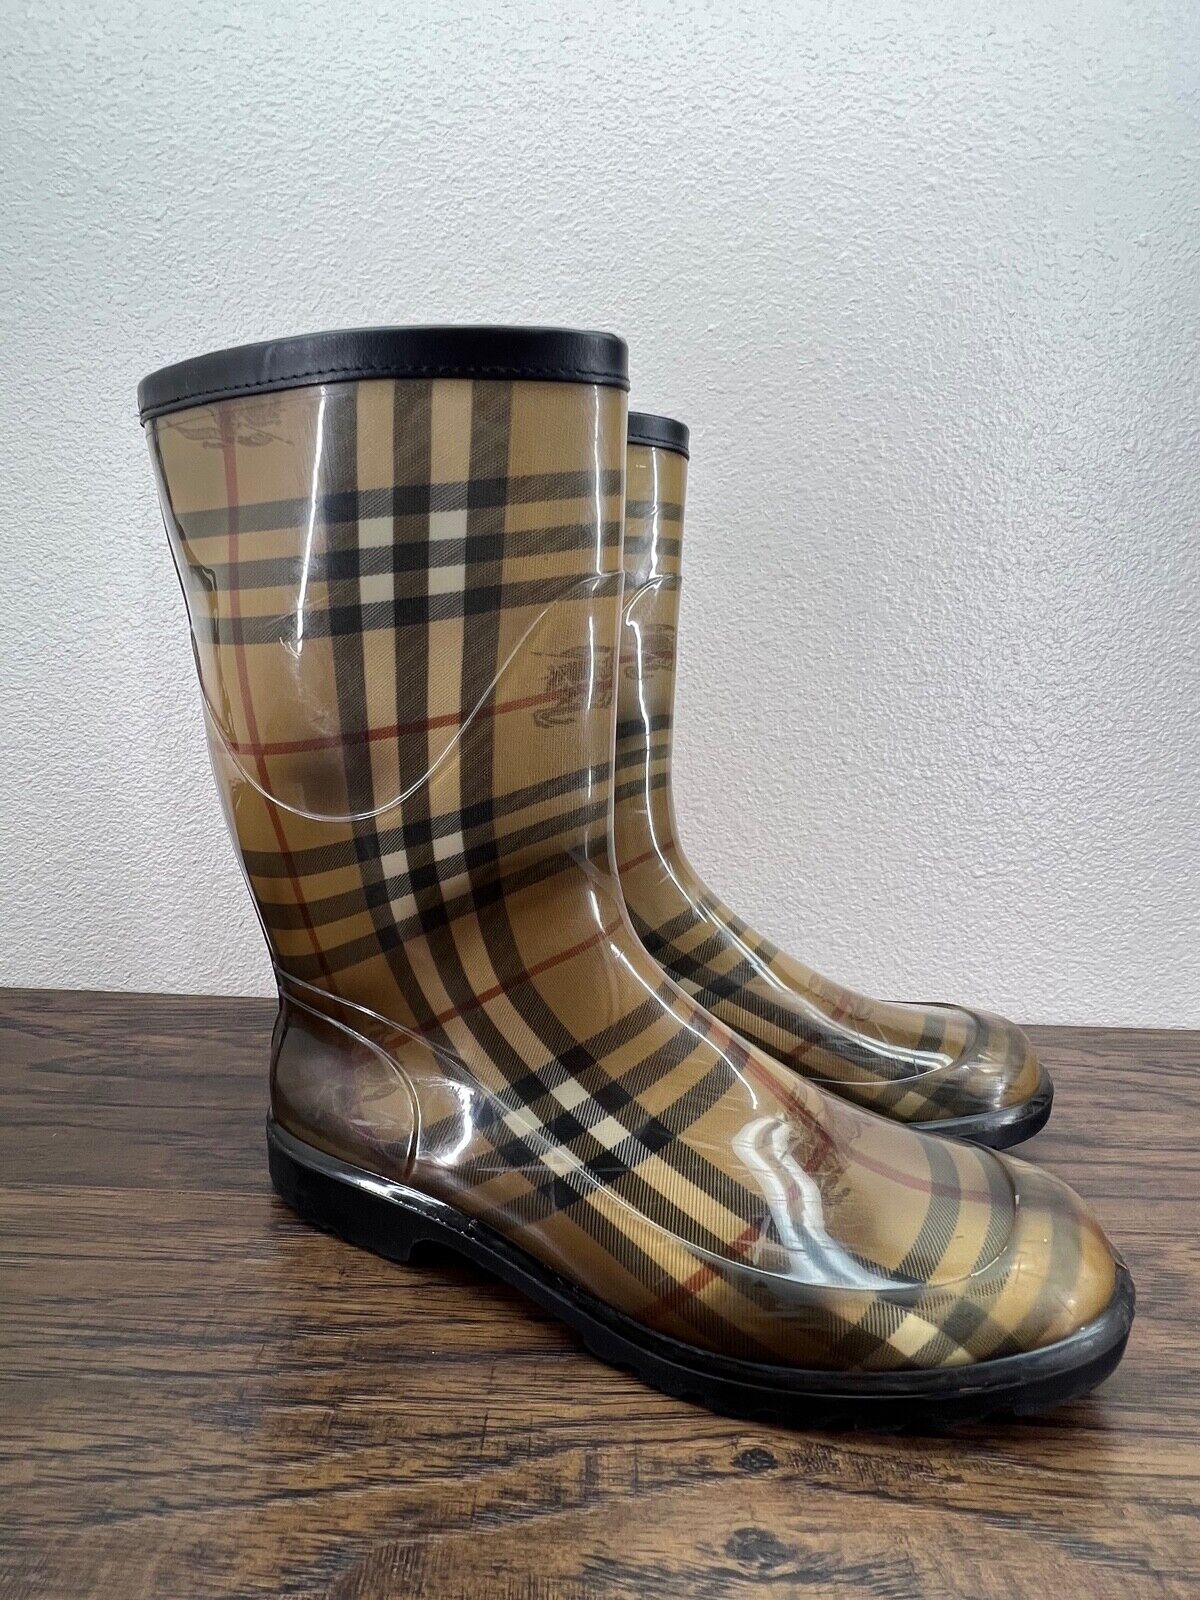 Authentic burberry rain boots 35 | eBay